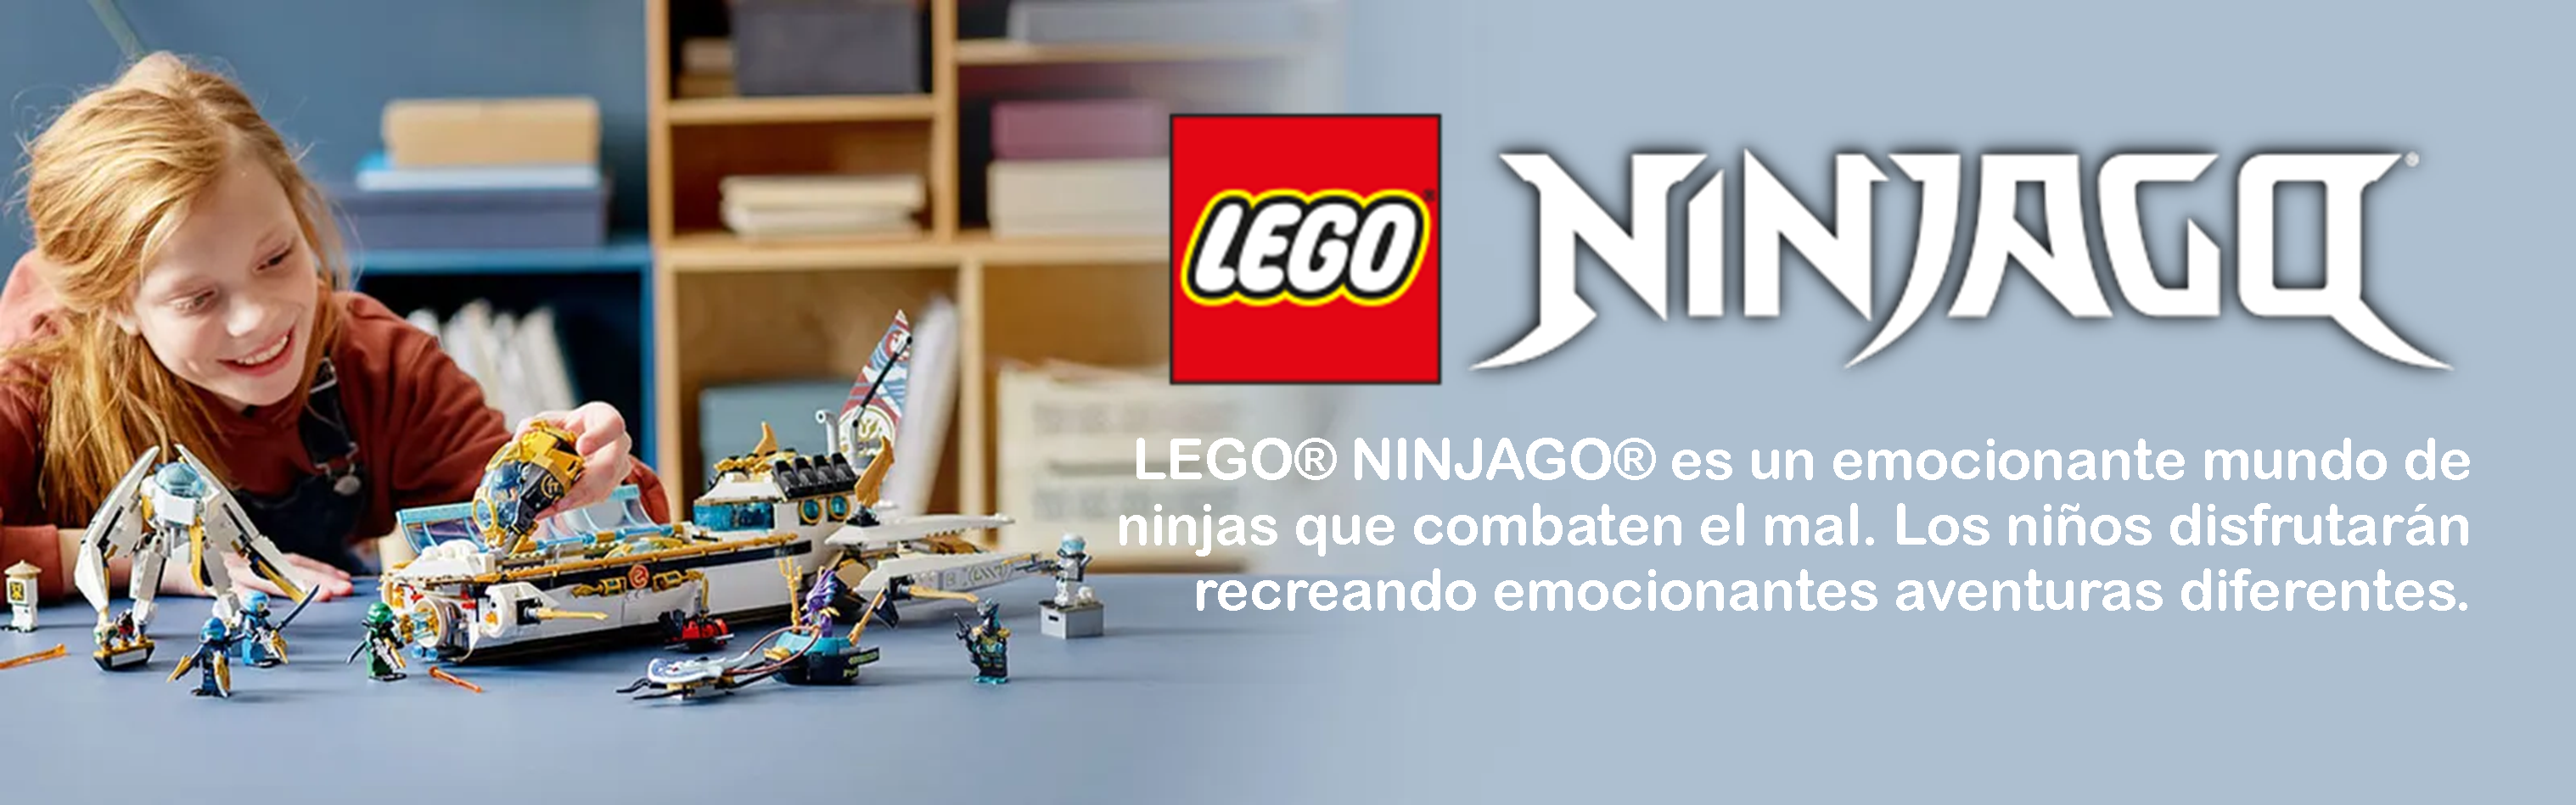 ninjago_encabezado_web_1